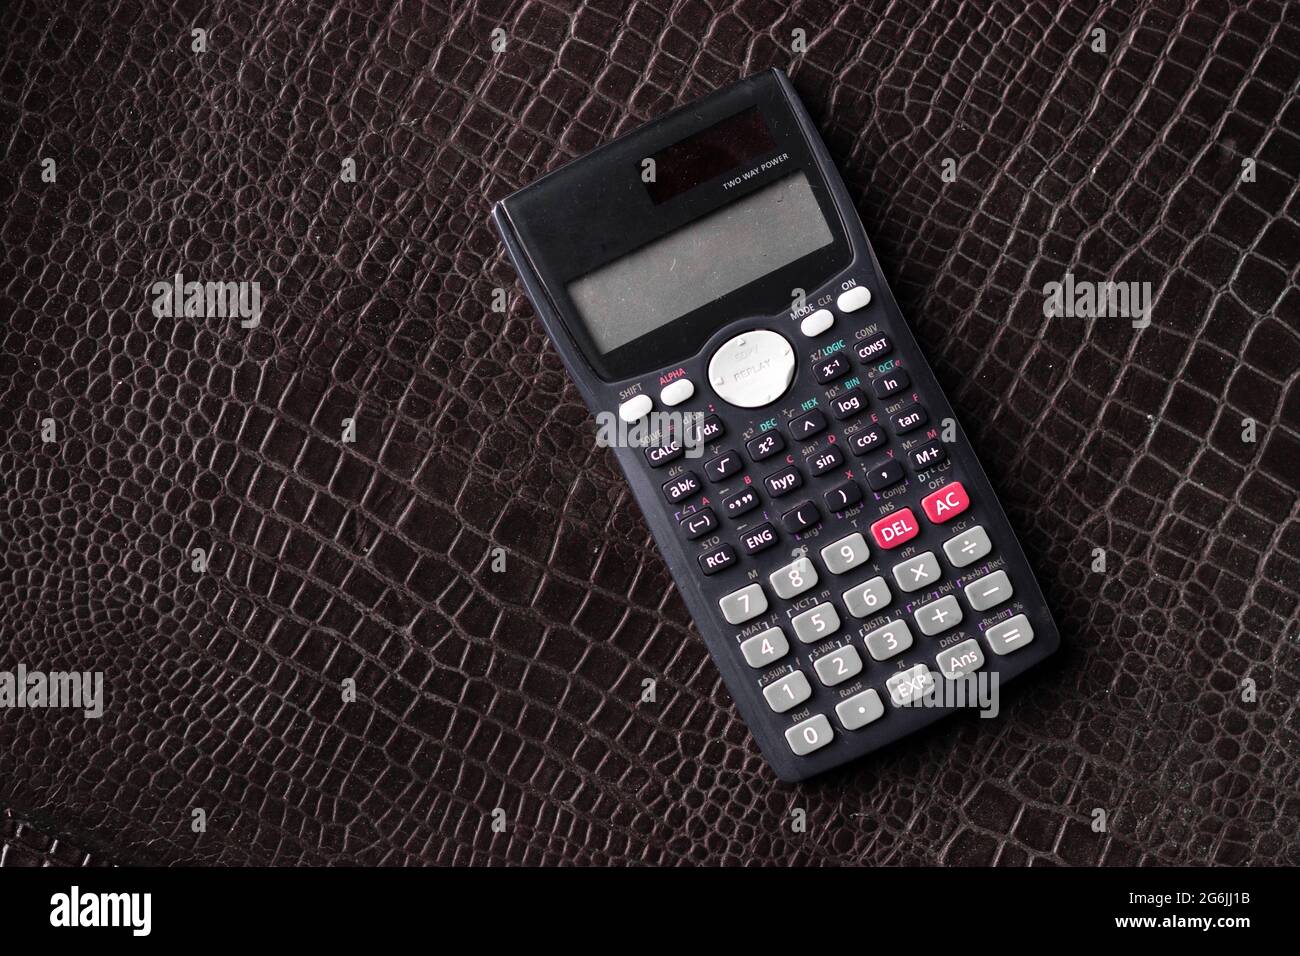 Scientific Calculator on a white background stock image Stock Photo - Alamy